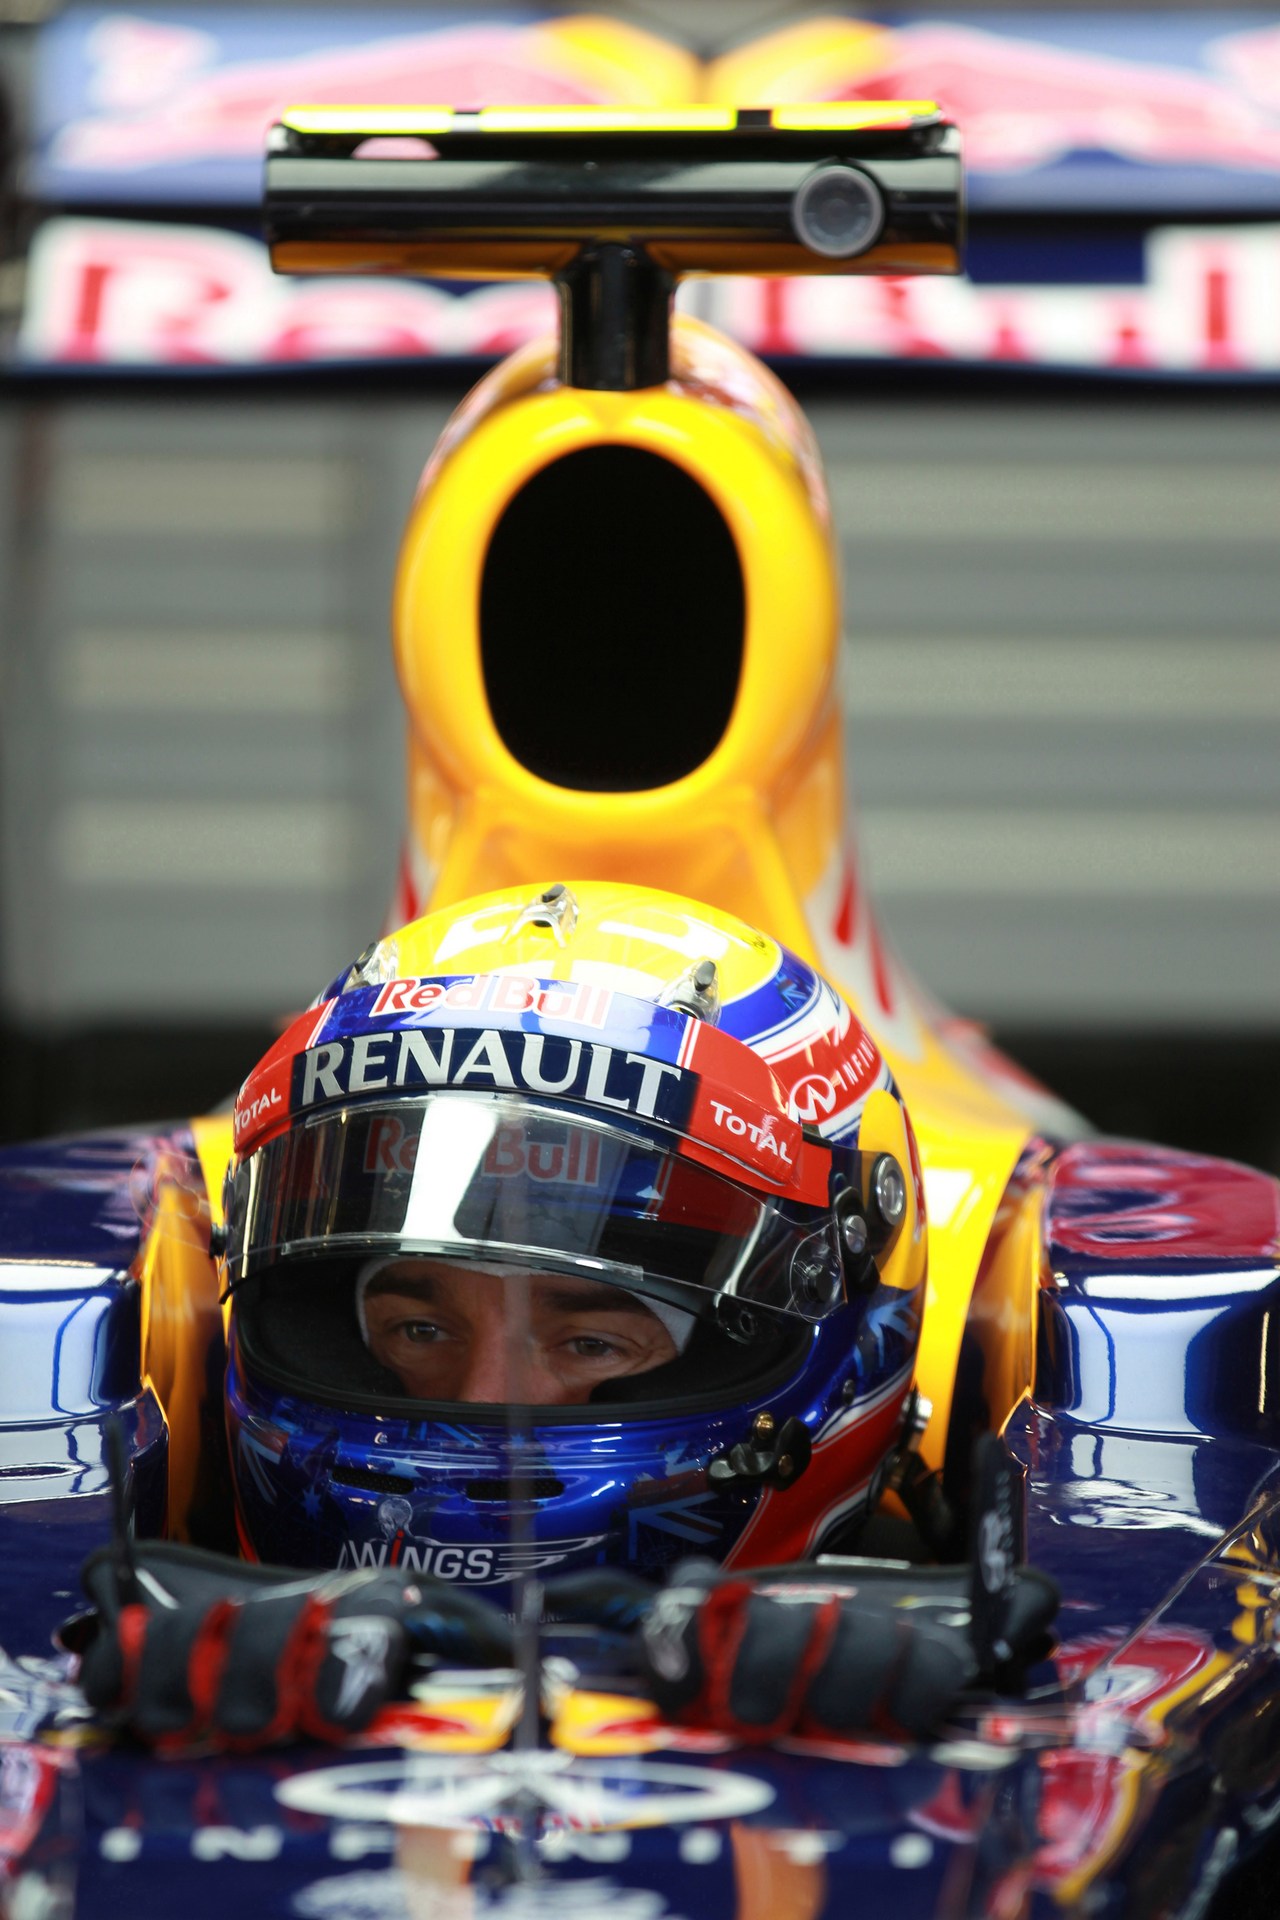 Formula 1 -Test a Barcellona - 1-4 marzo 2012